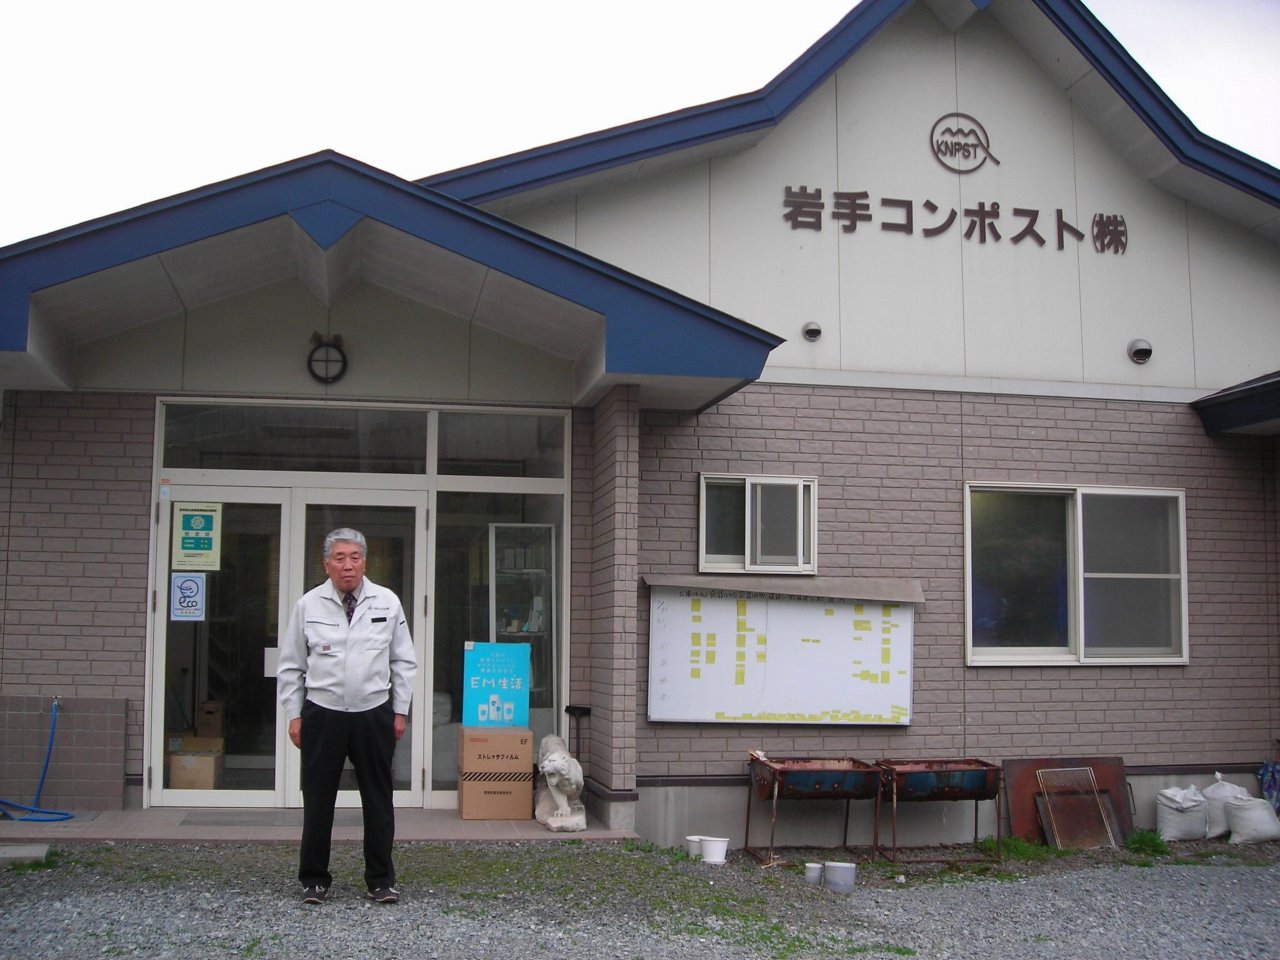 Mr. Sugawara of Iwate Compost